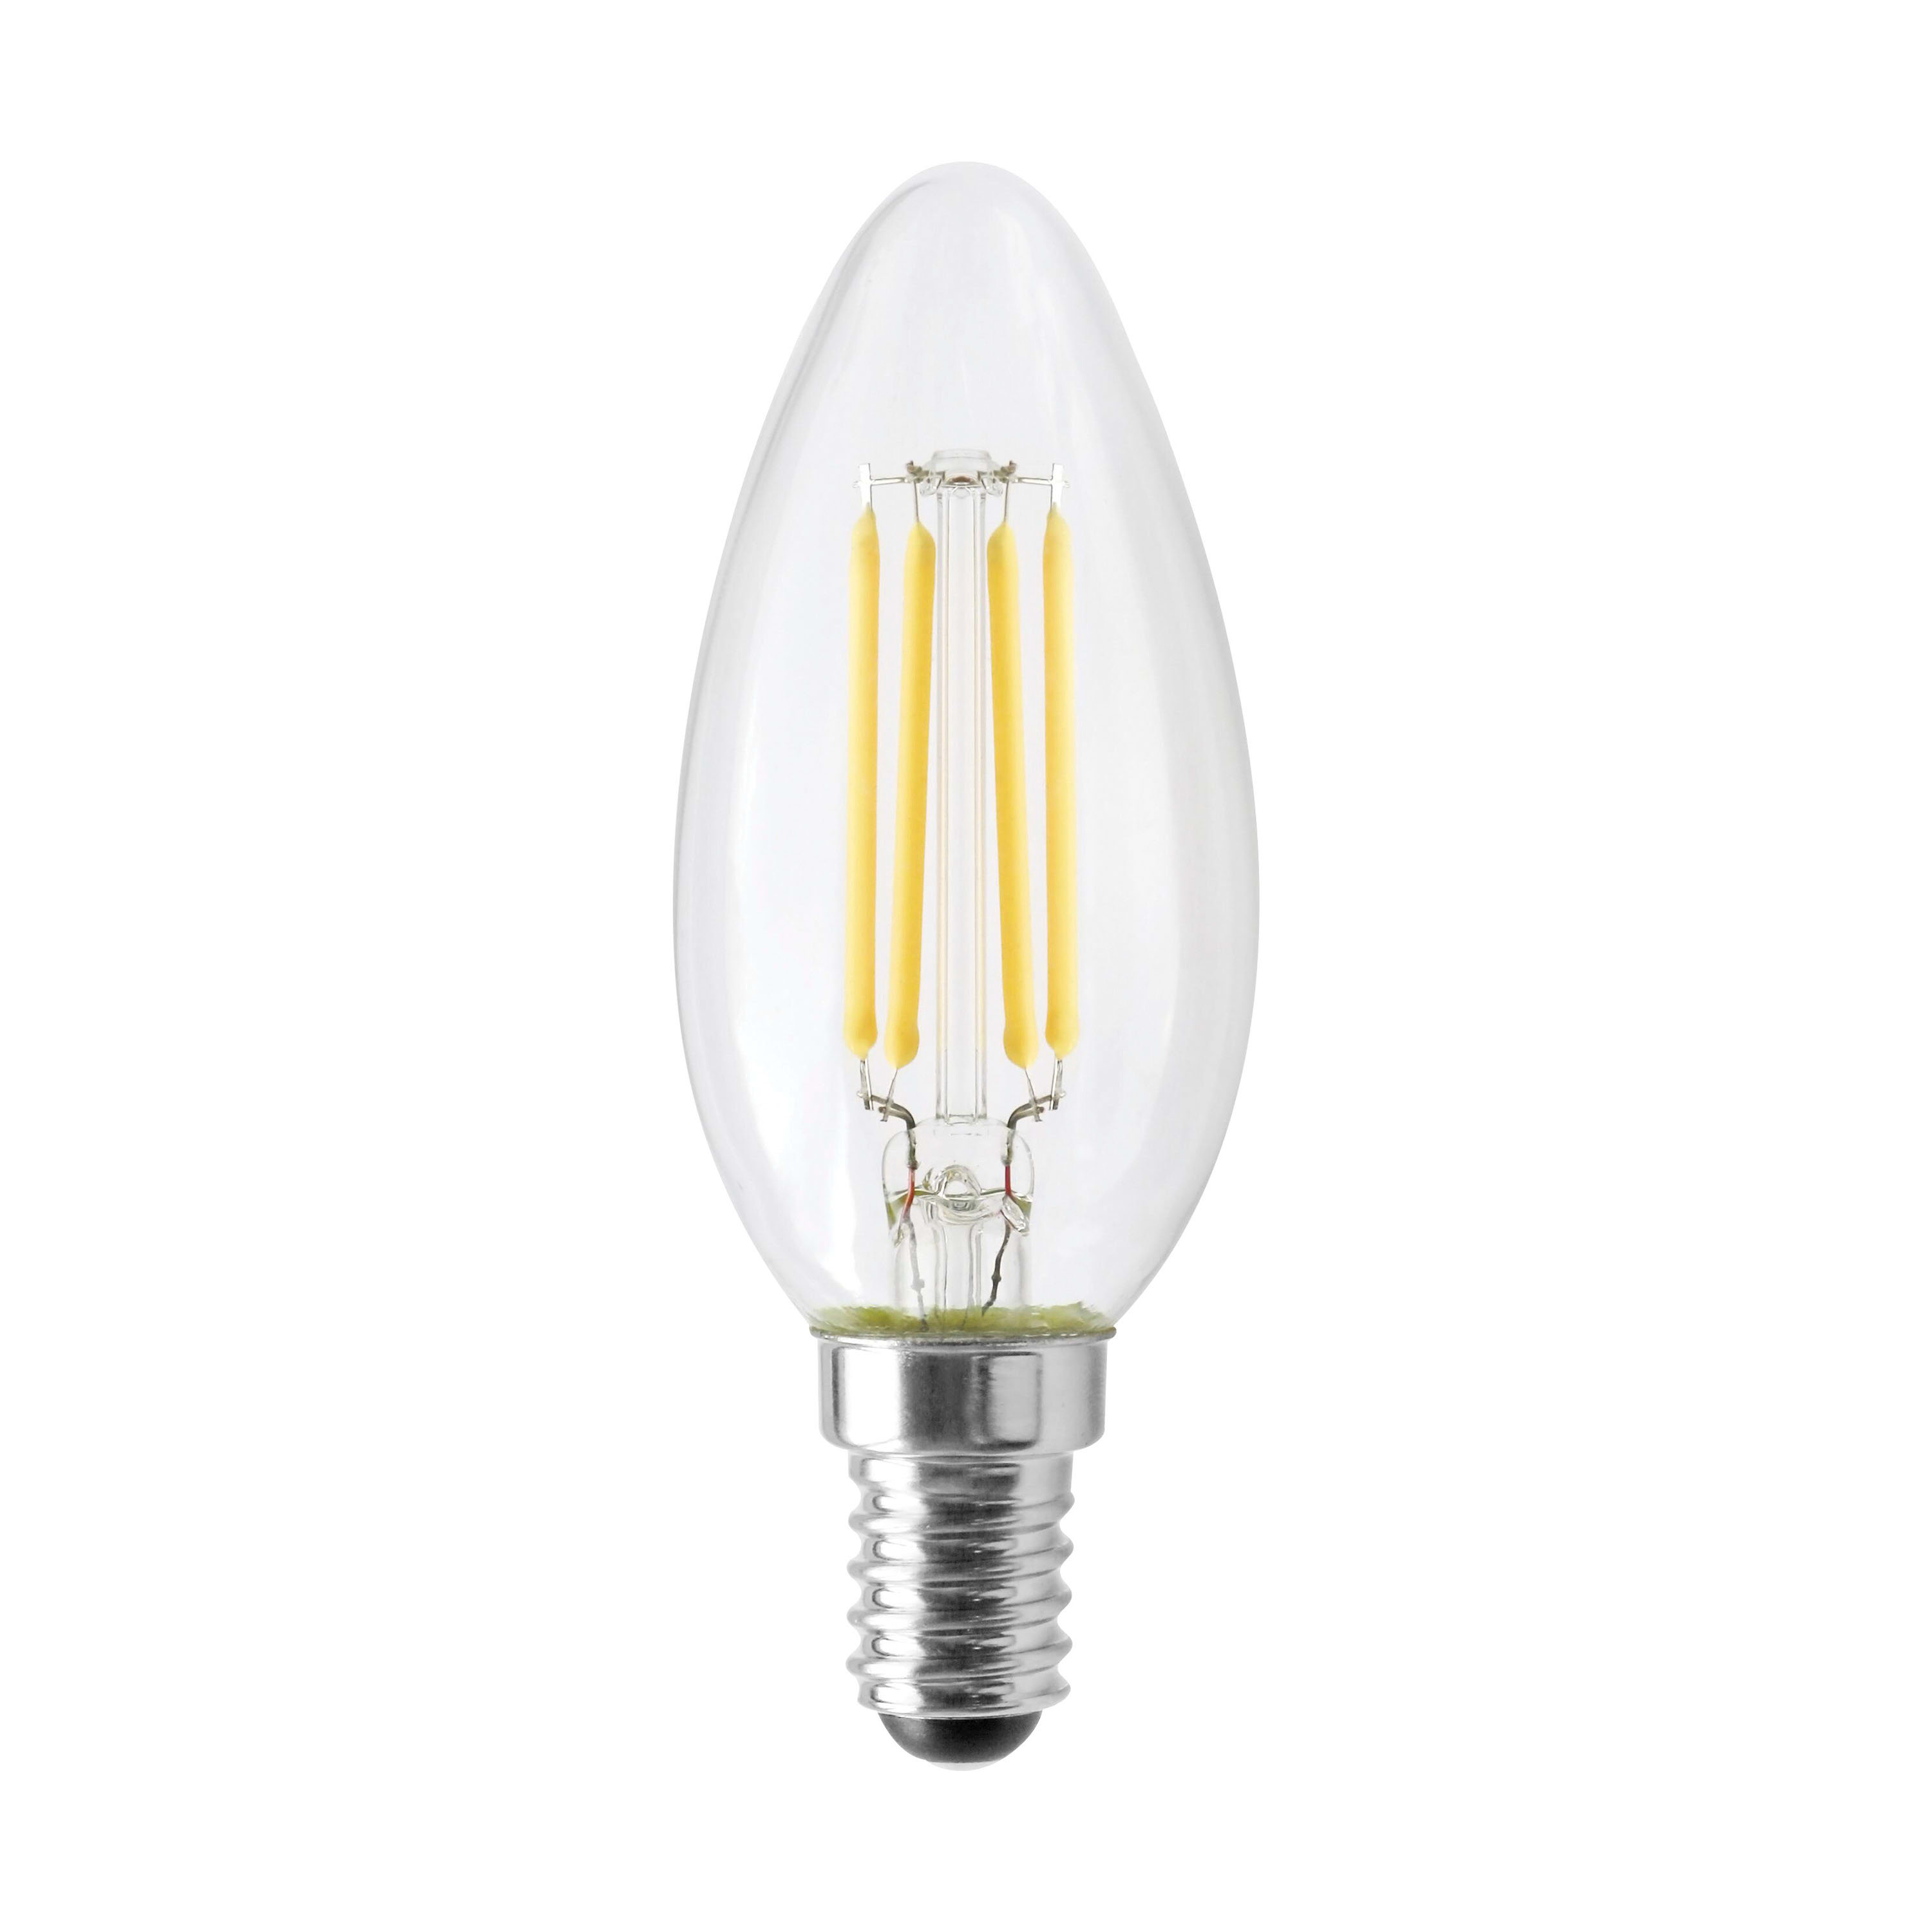 Satco Lighting S12116 Clear Single 4.5 Watt Dimmable European (E14) LED Bulb - 350 Lumens, and 80CRI - LightingDirect.com